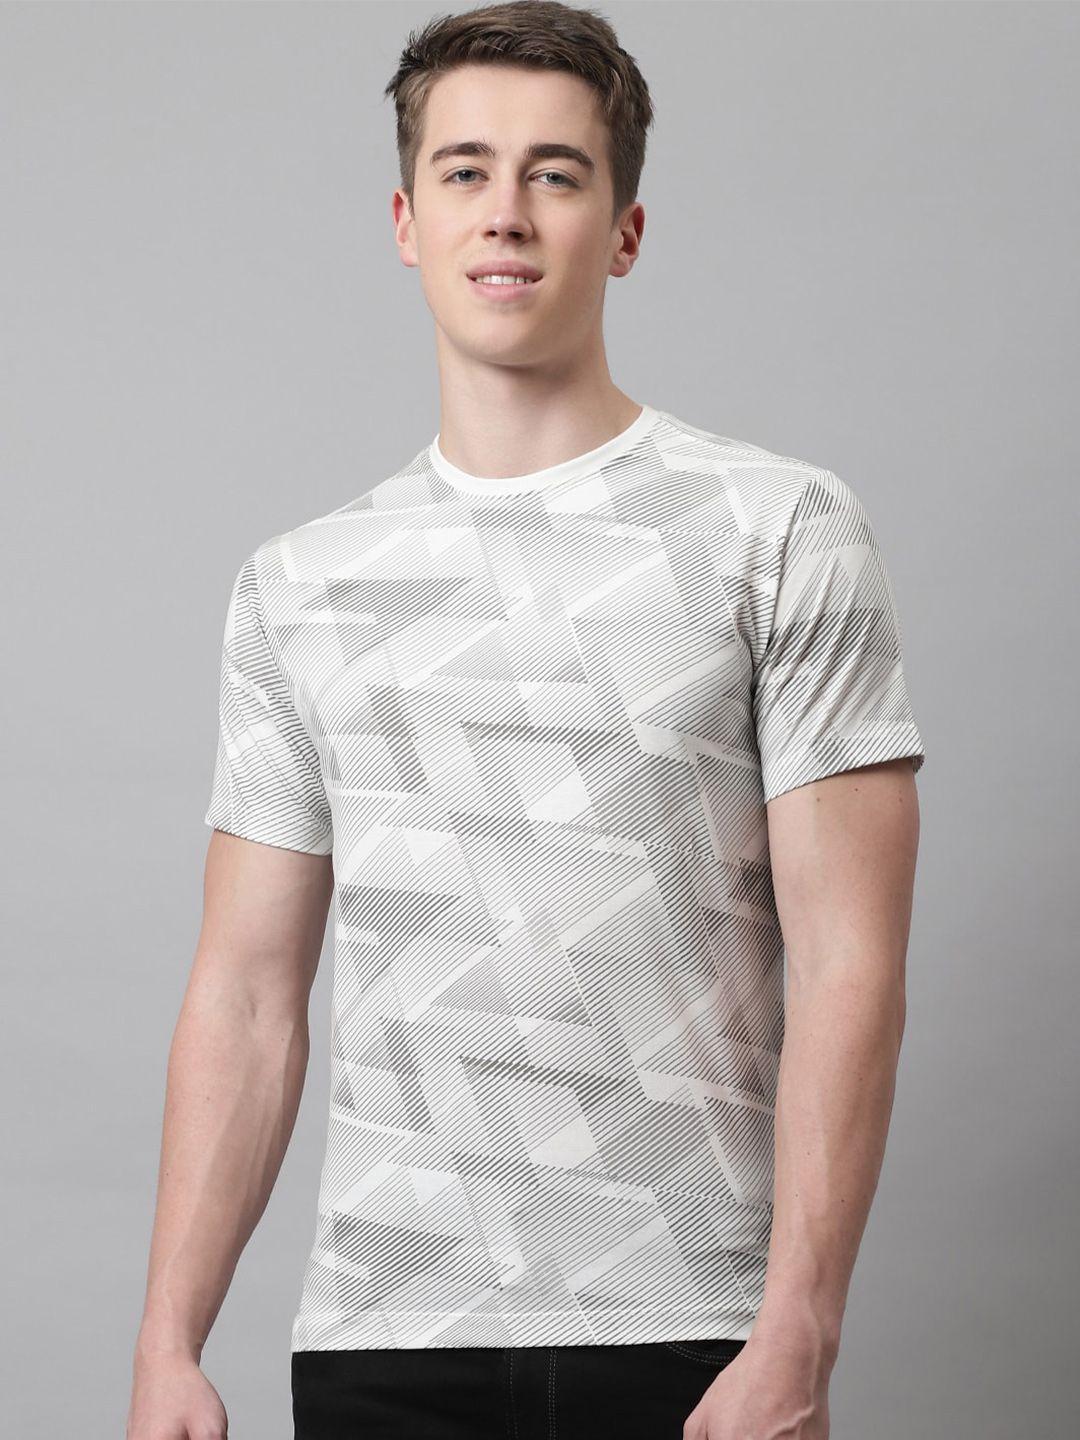 venitian geometric printed cotton t-shirt